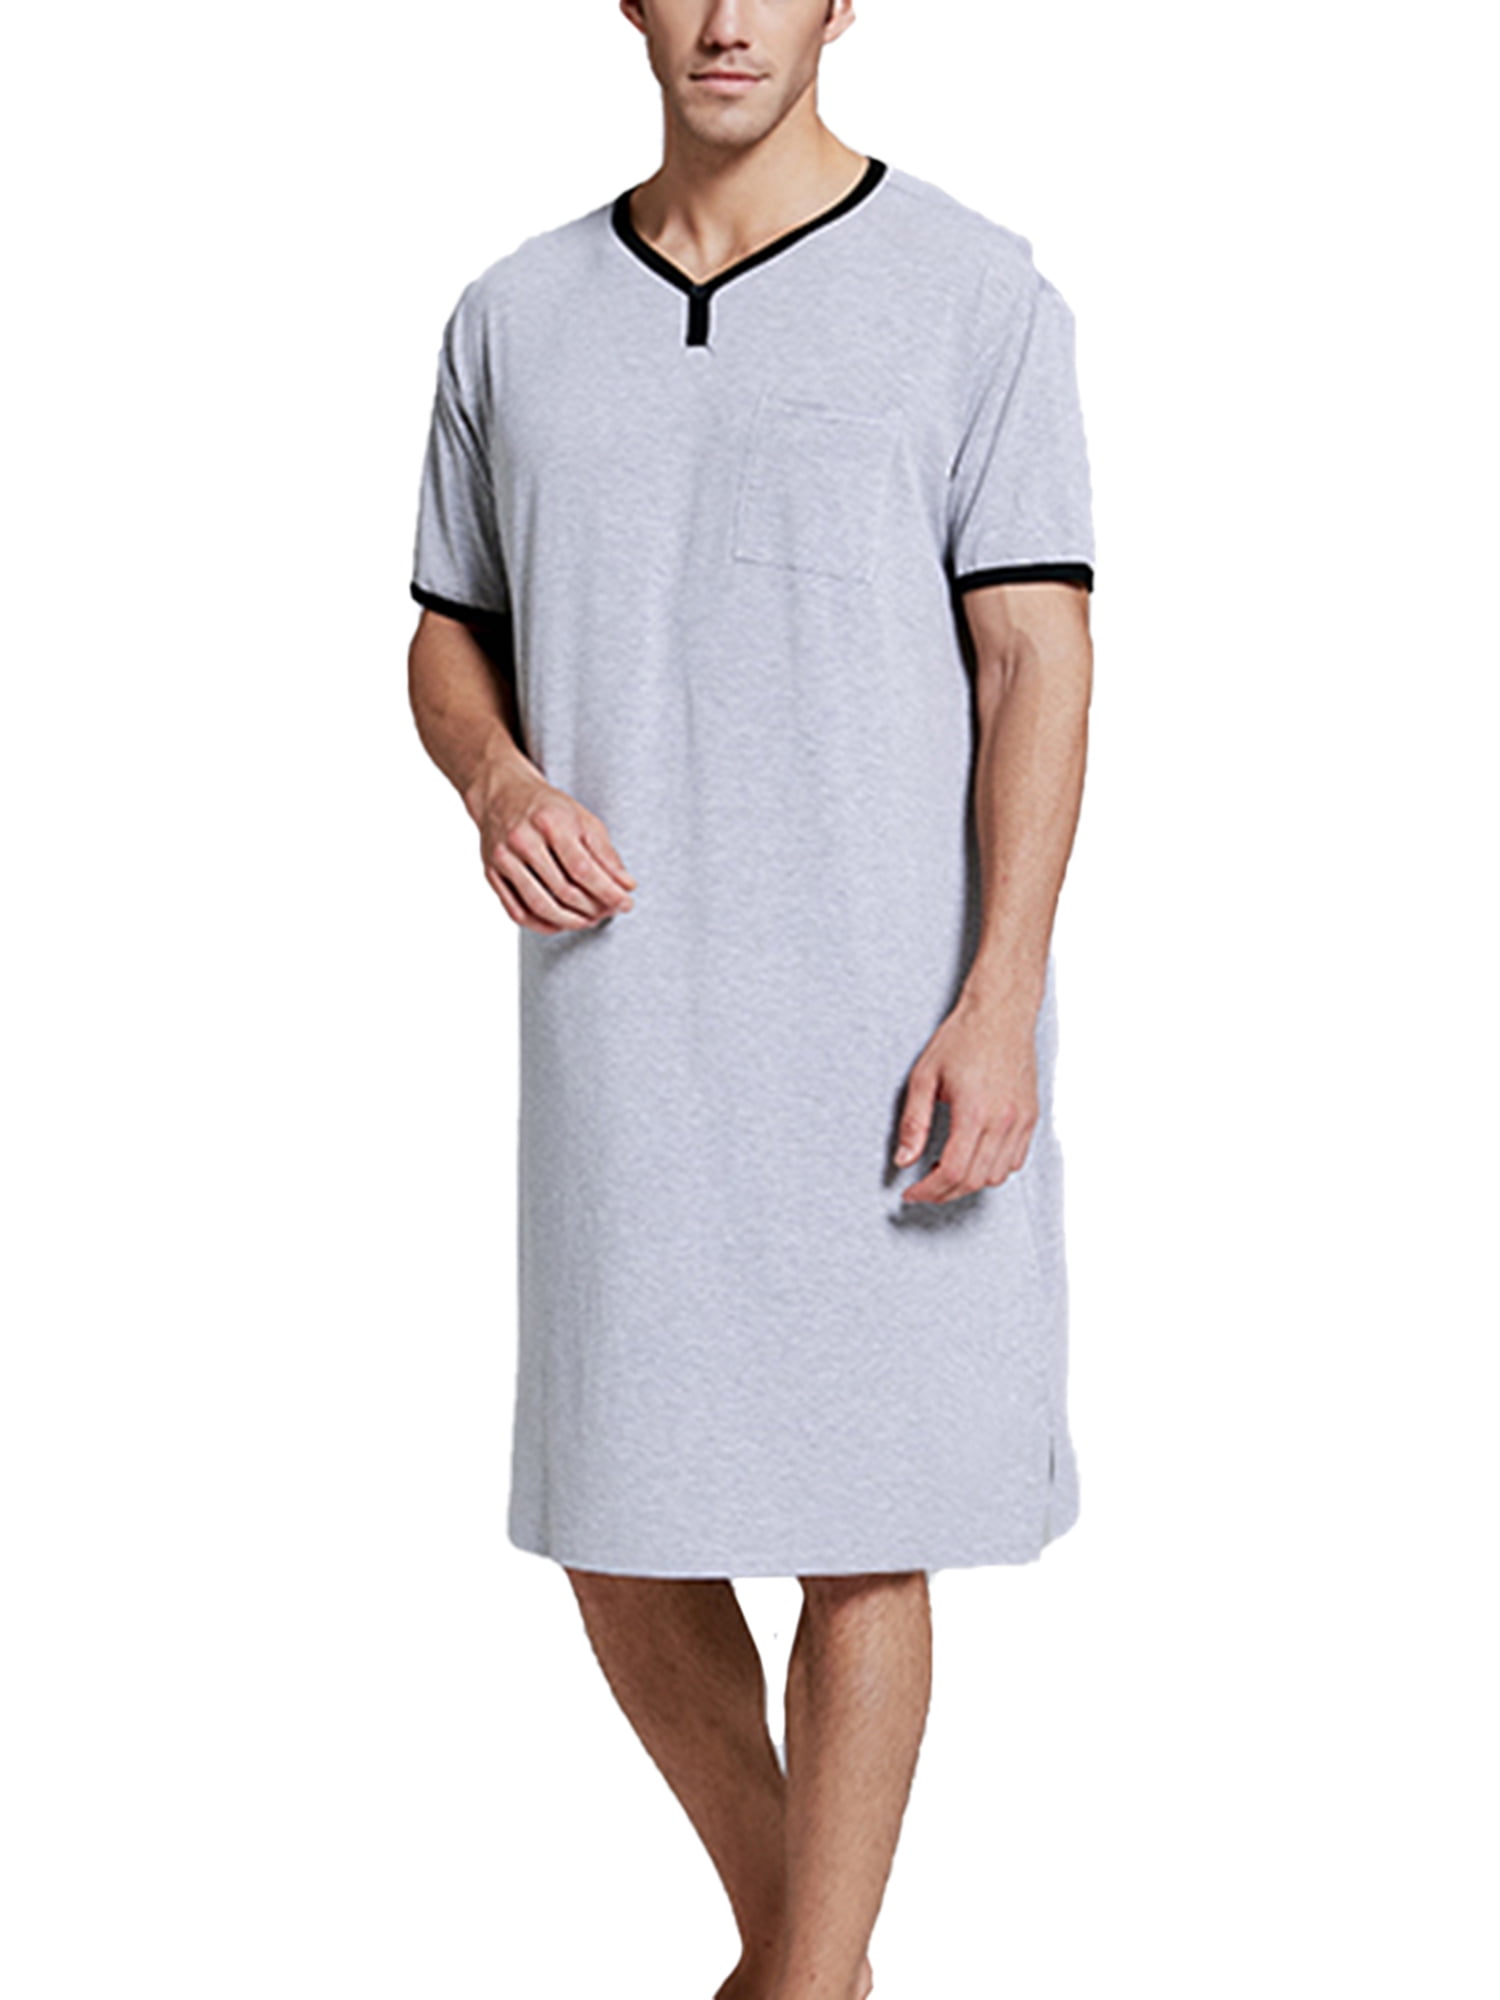 MINTLIMIT Mens Nightshirt Short Sleeve Pajama Top Nightwear Henley Neck Nightdress Bathrobe Nightgown with Pockets 